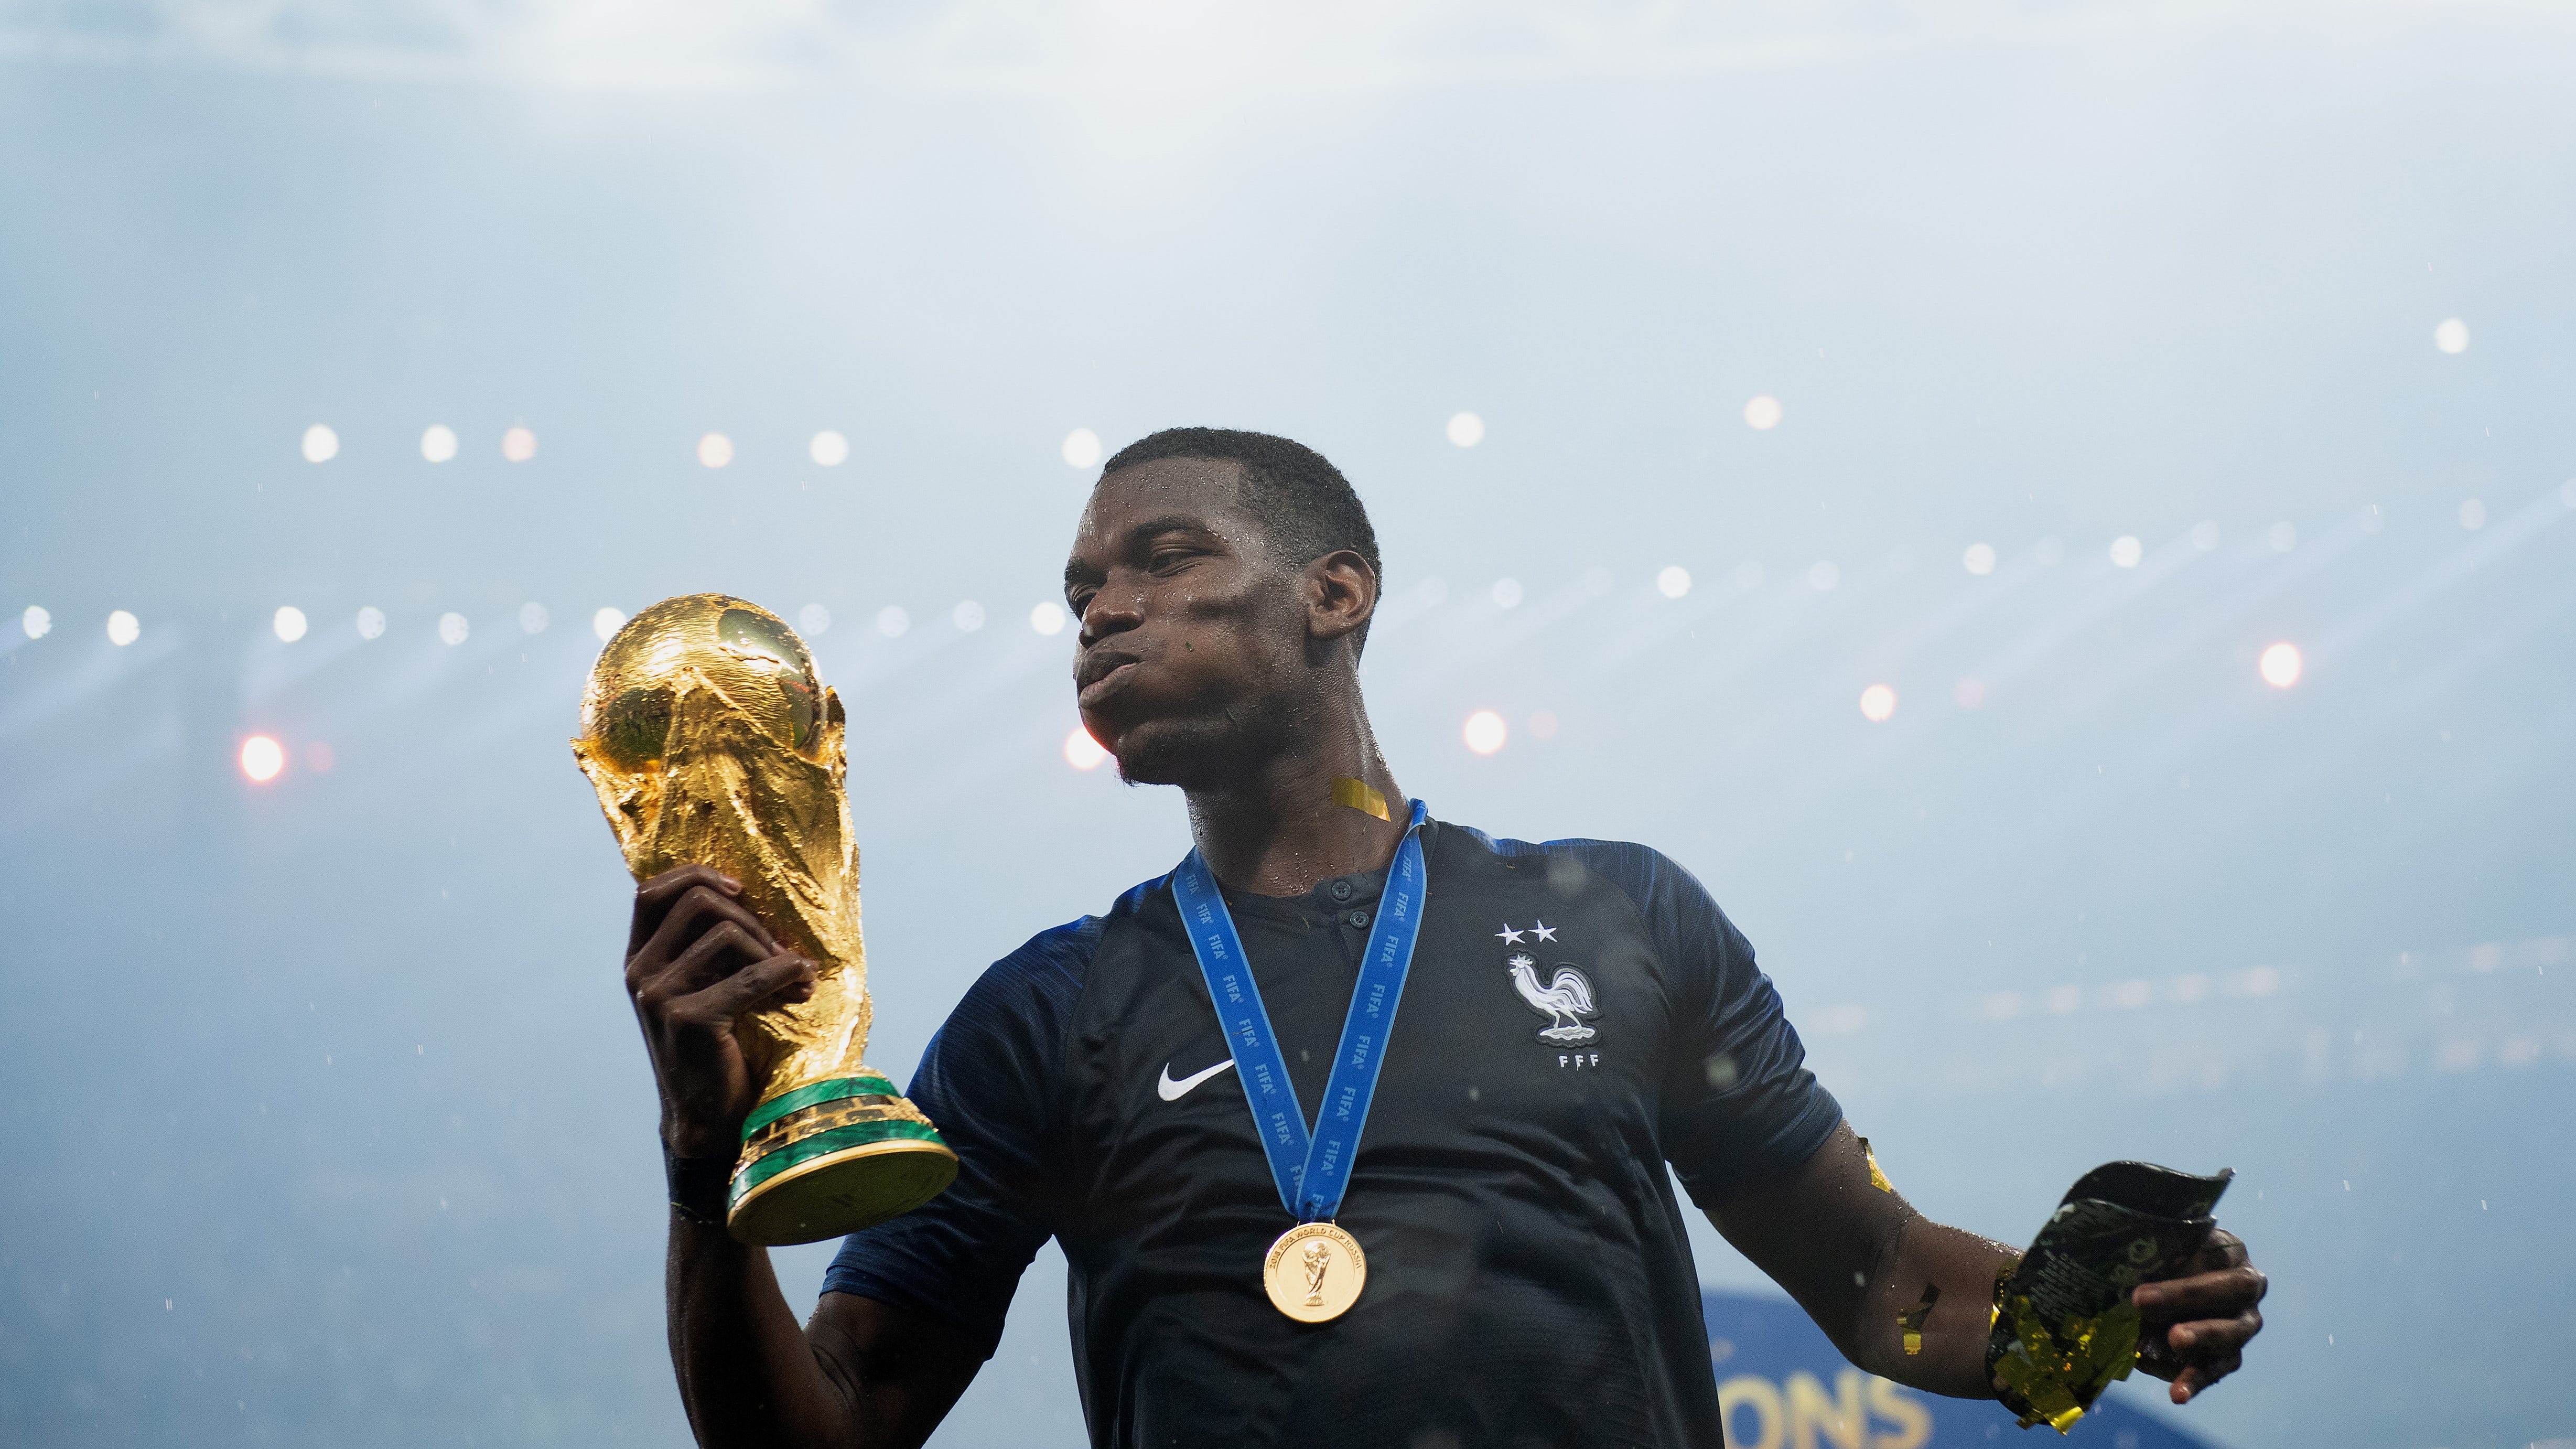 Paul Pogba France 2018 World Cup